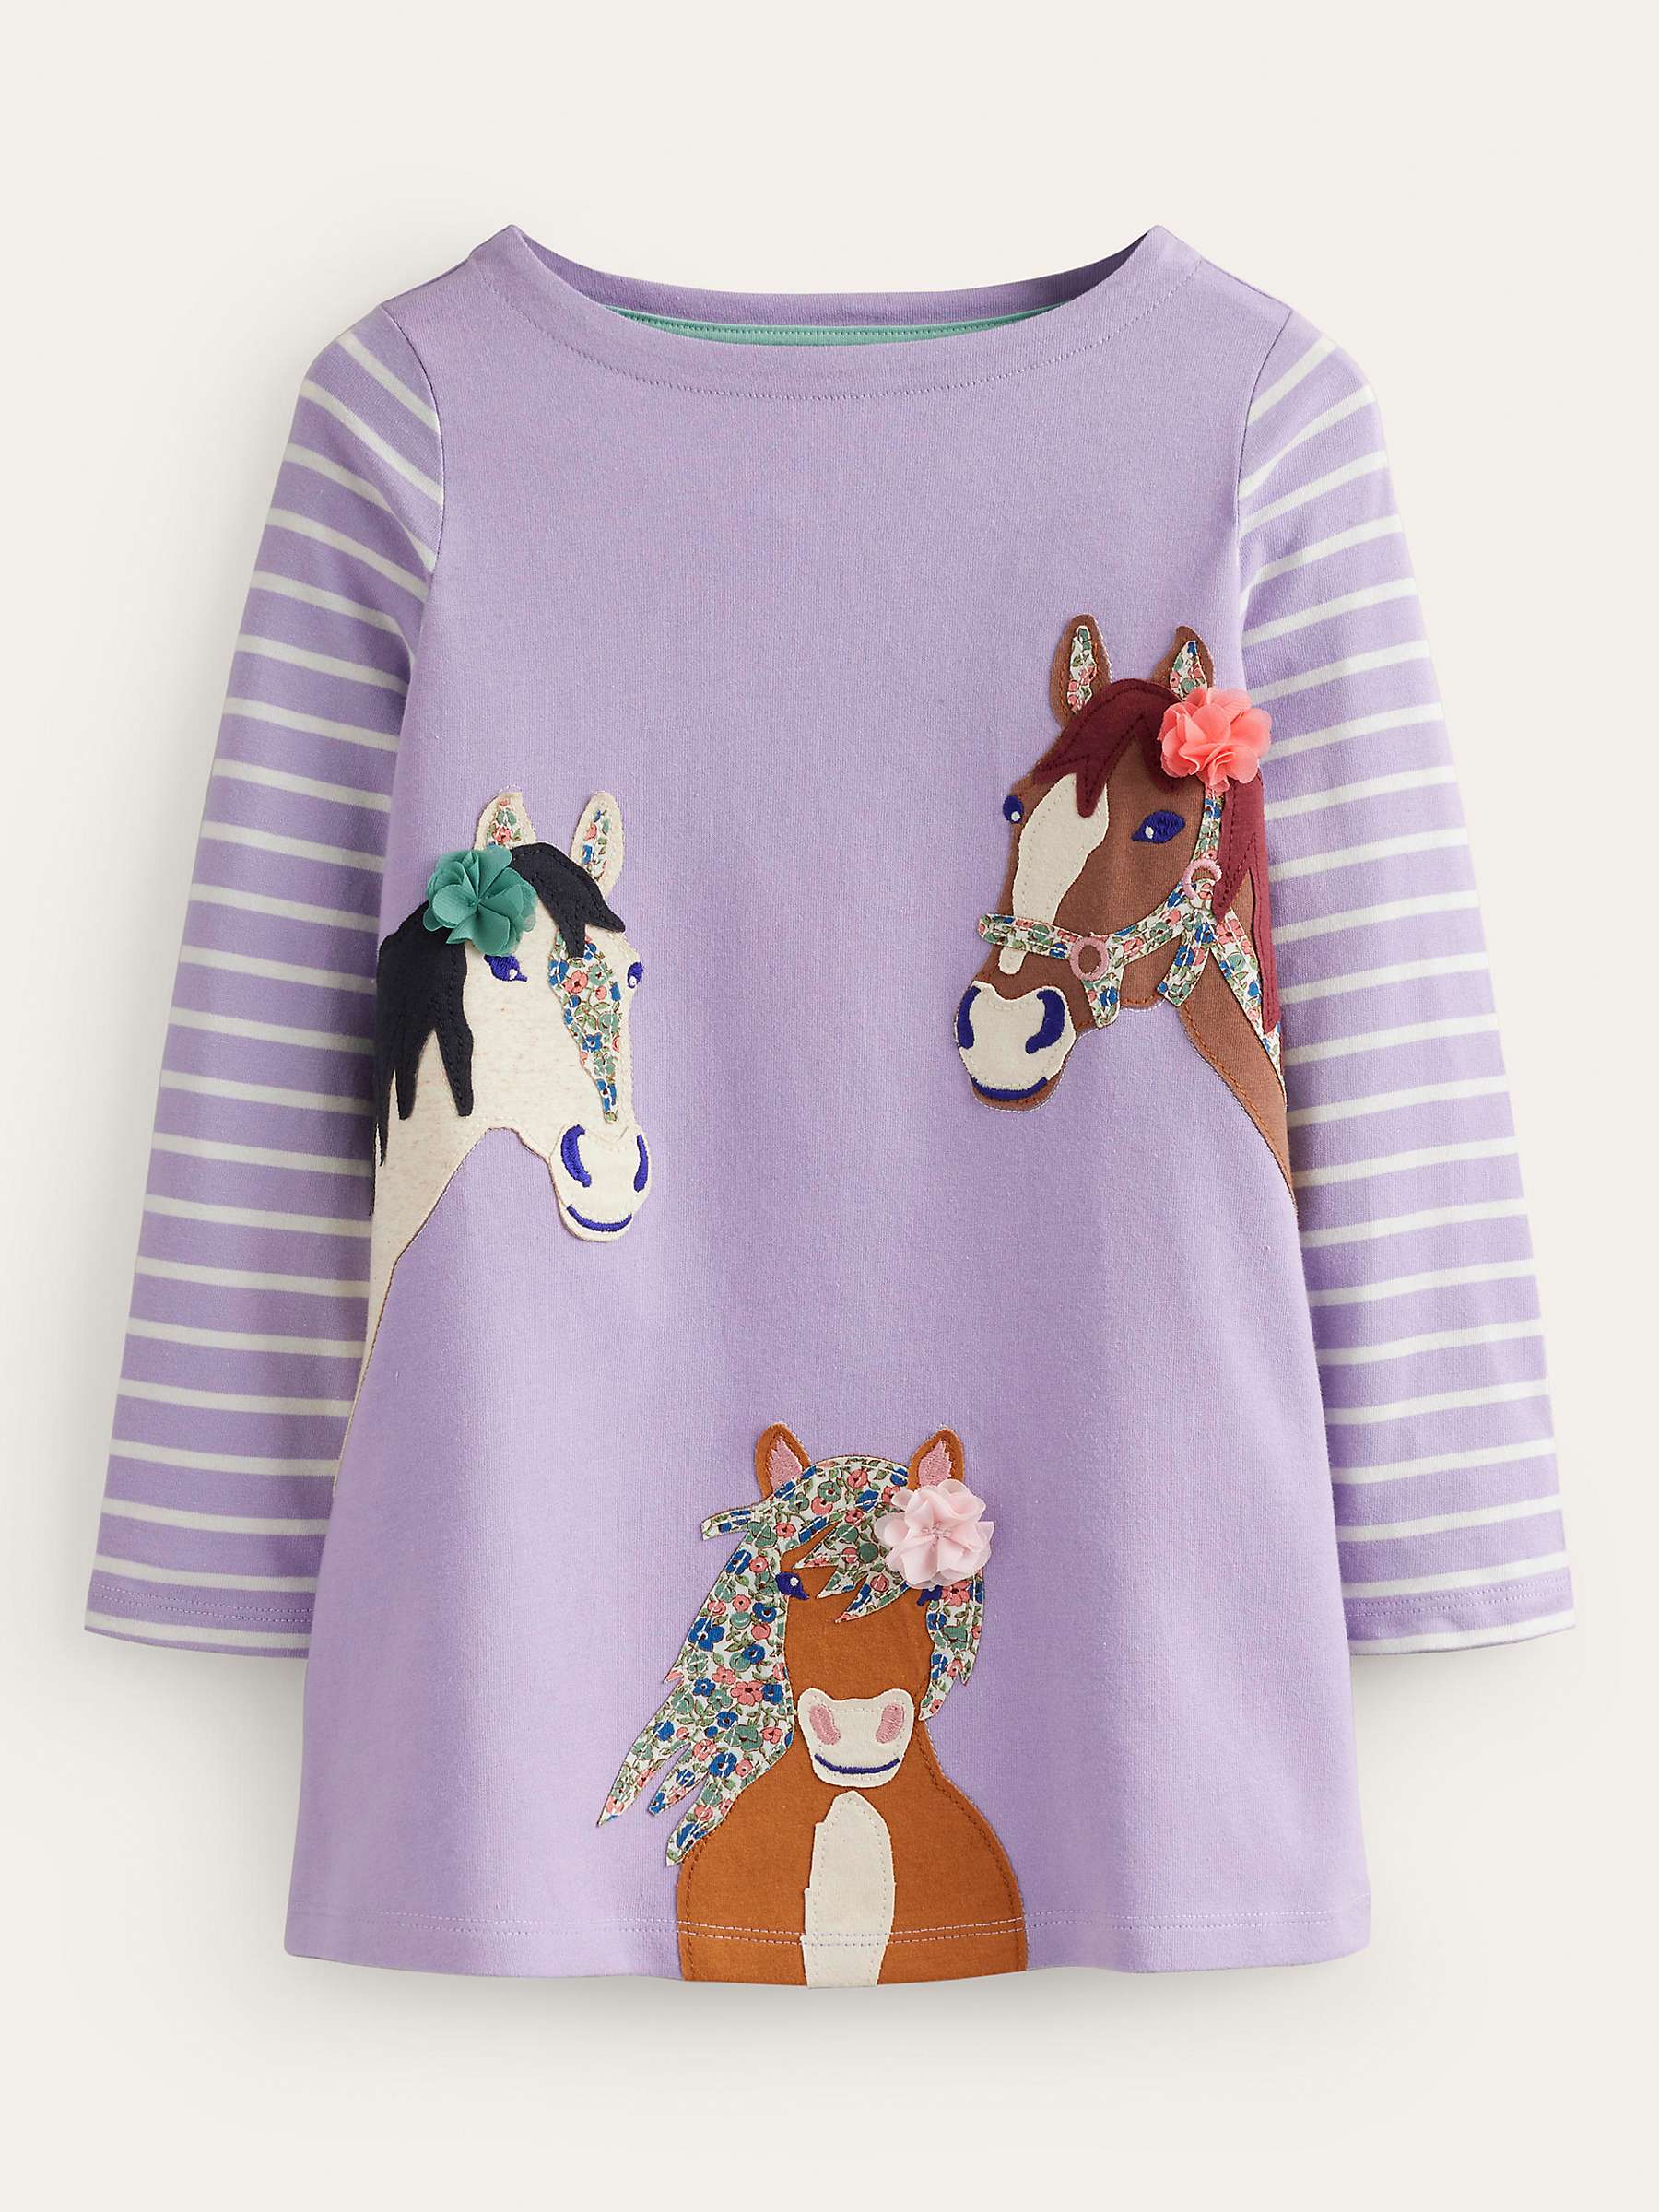 Buy Mini Boden Kids' Horse Applique Tunic, Misty Lavendar Online at johnlewis.com